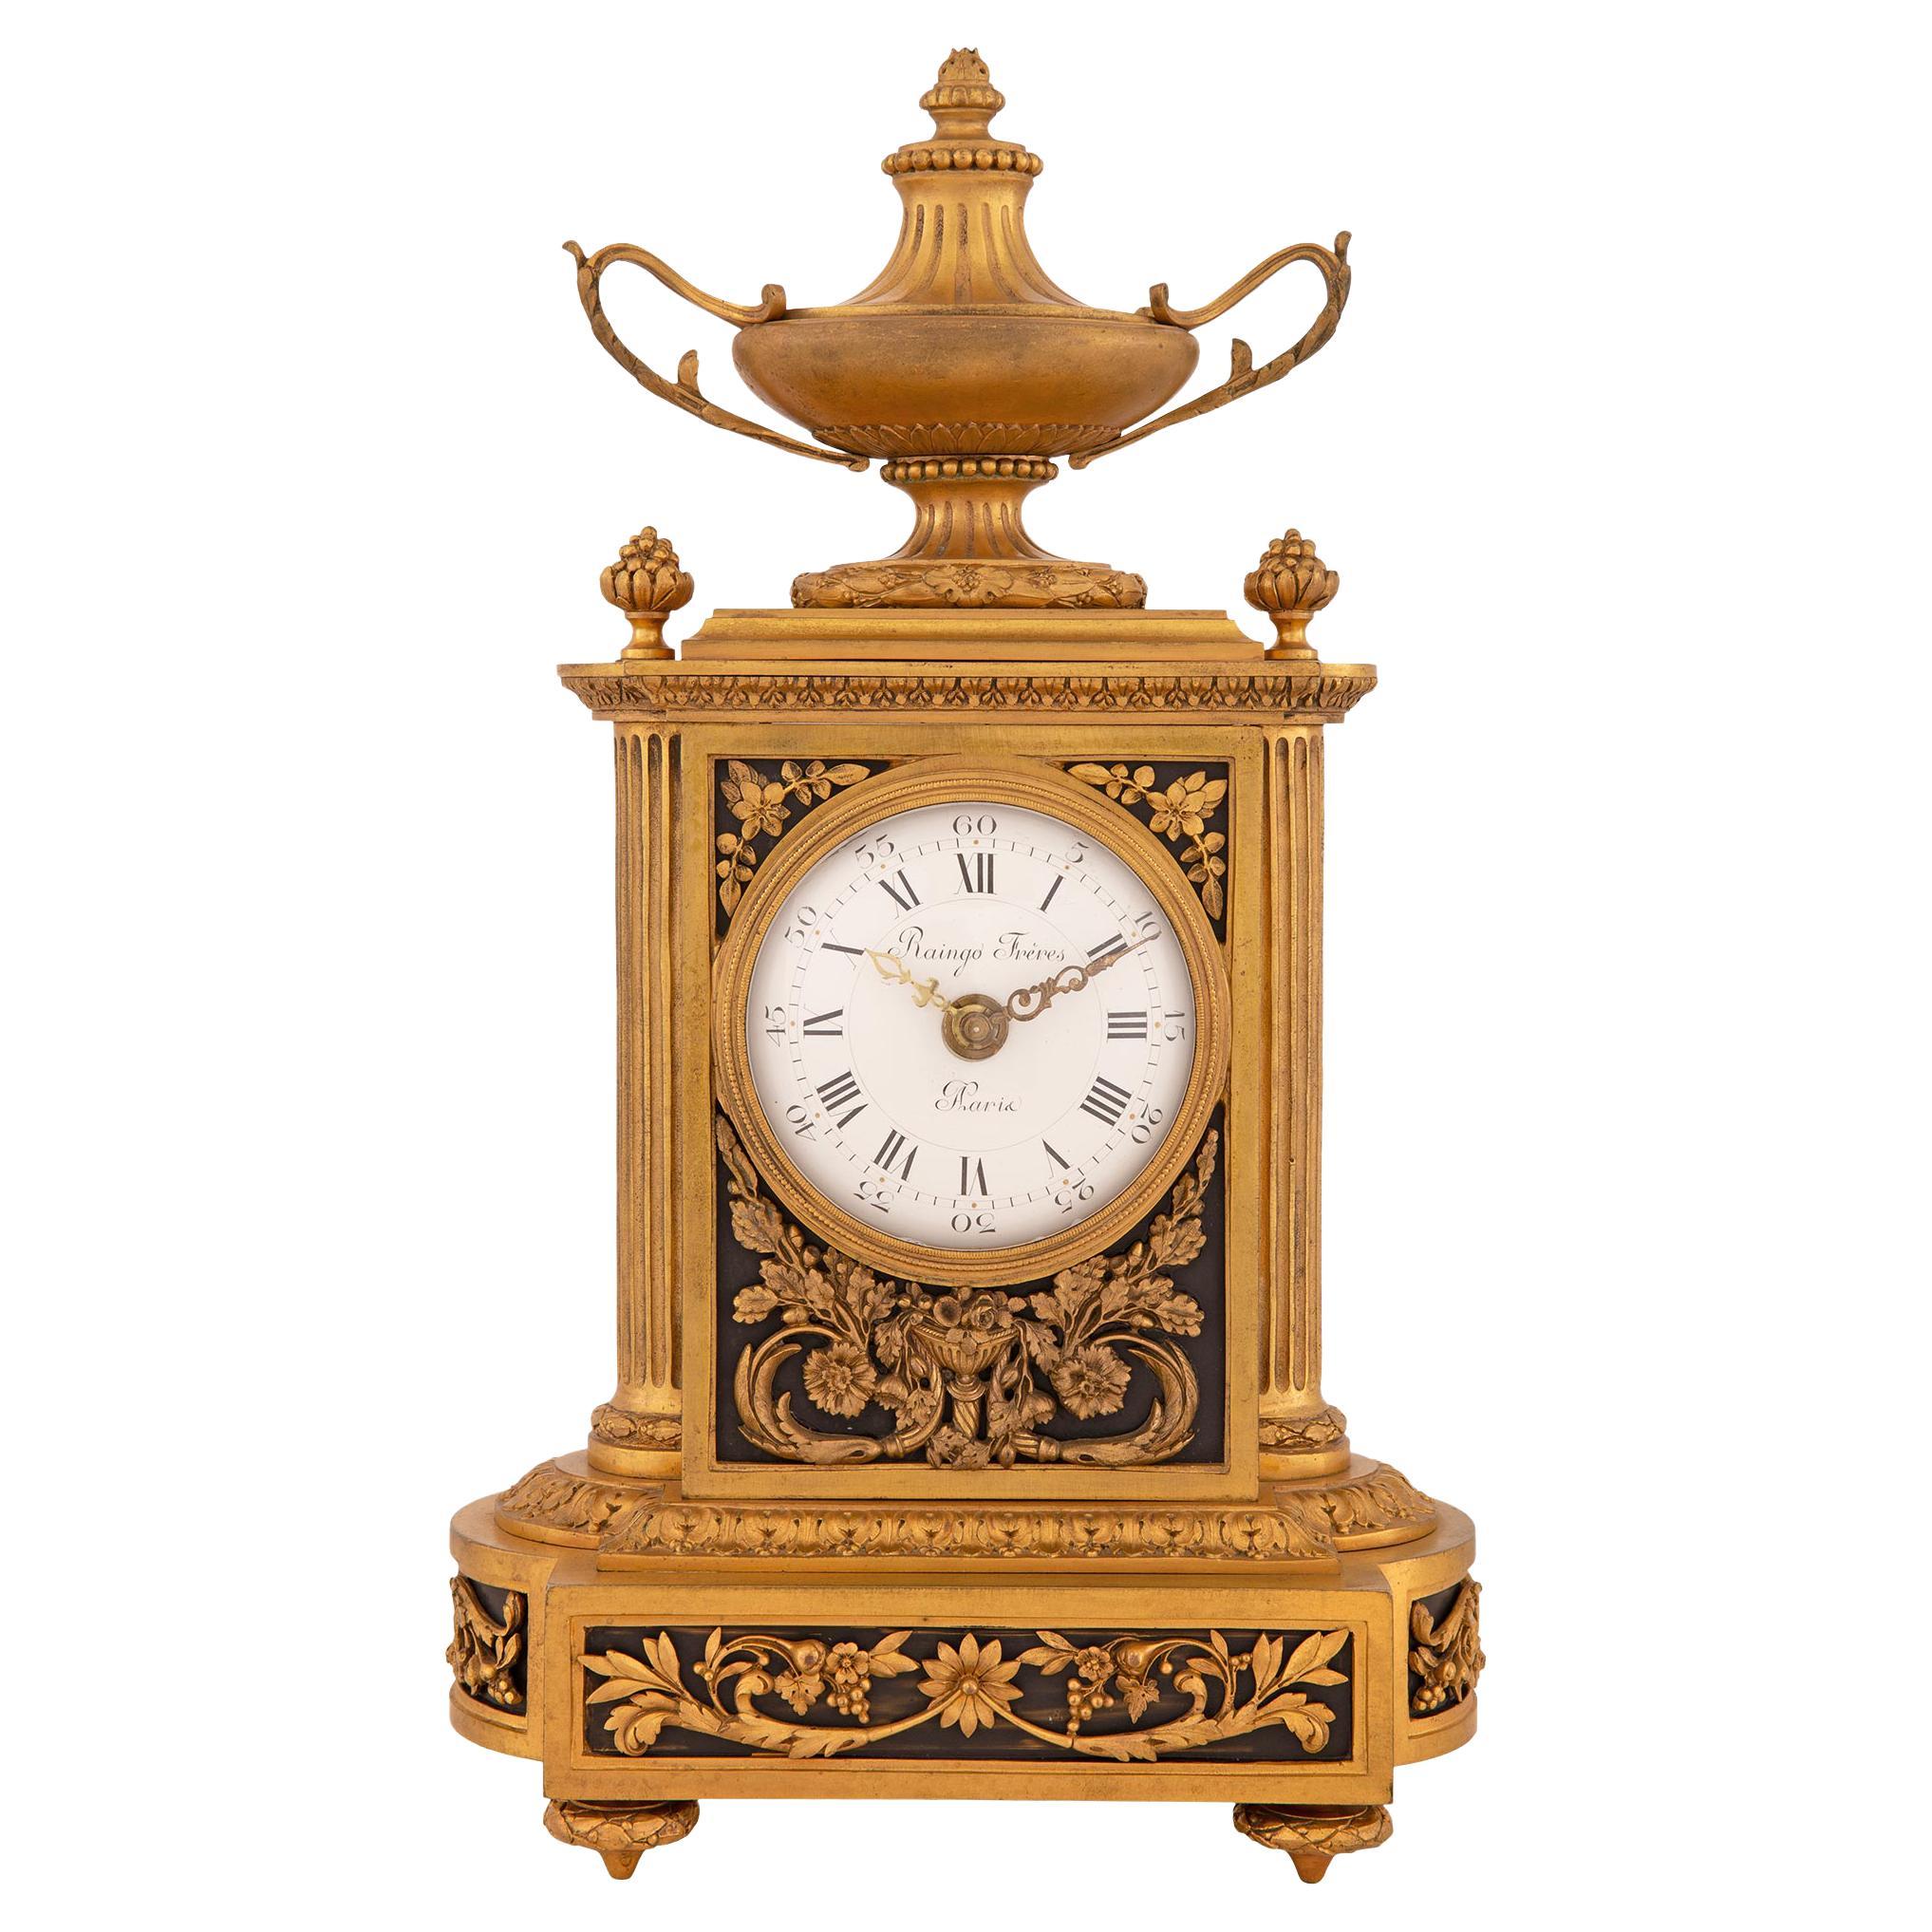 French 19th Century Louis XVI Style Ormolu Clock Signed 'Raingo Freres, Paris